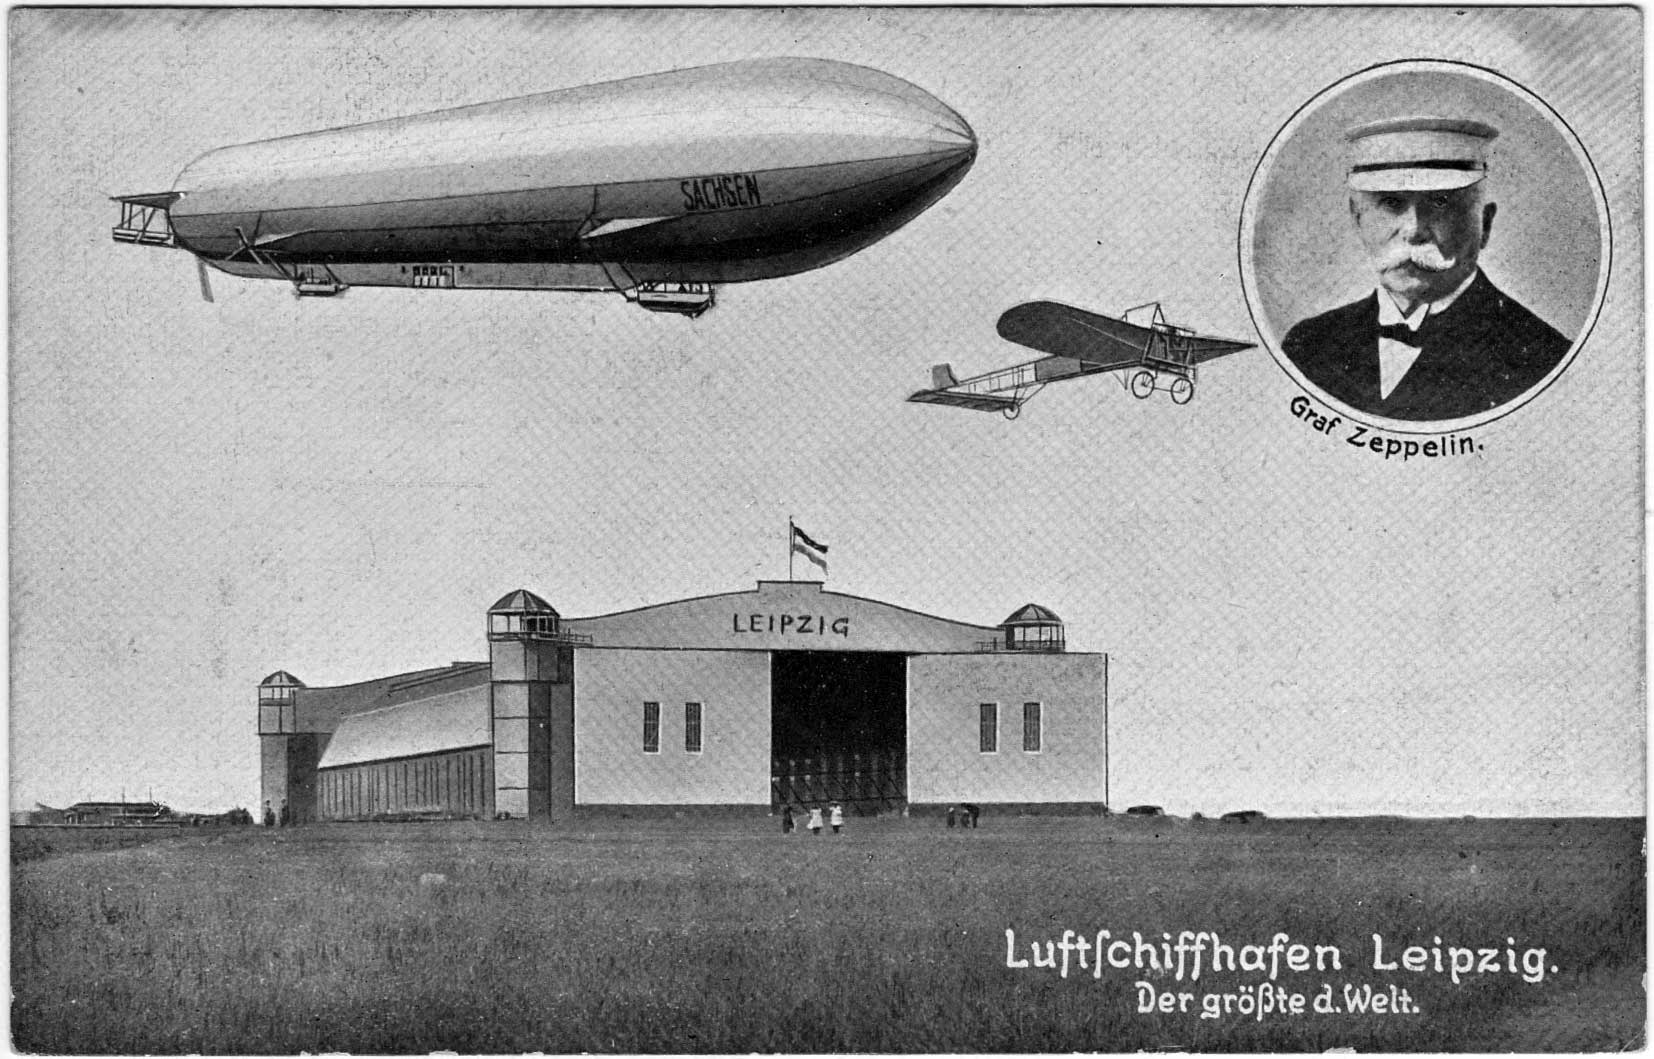 https://www.airships.net/wp-content/uploads/sachsen-leipzig-2021.jpg